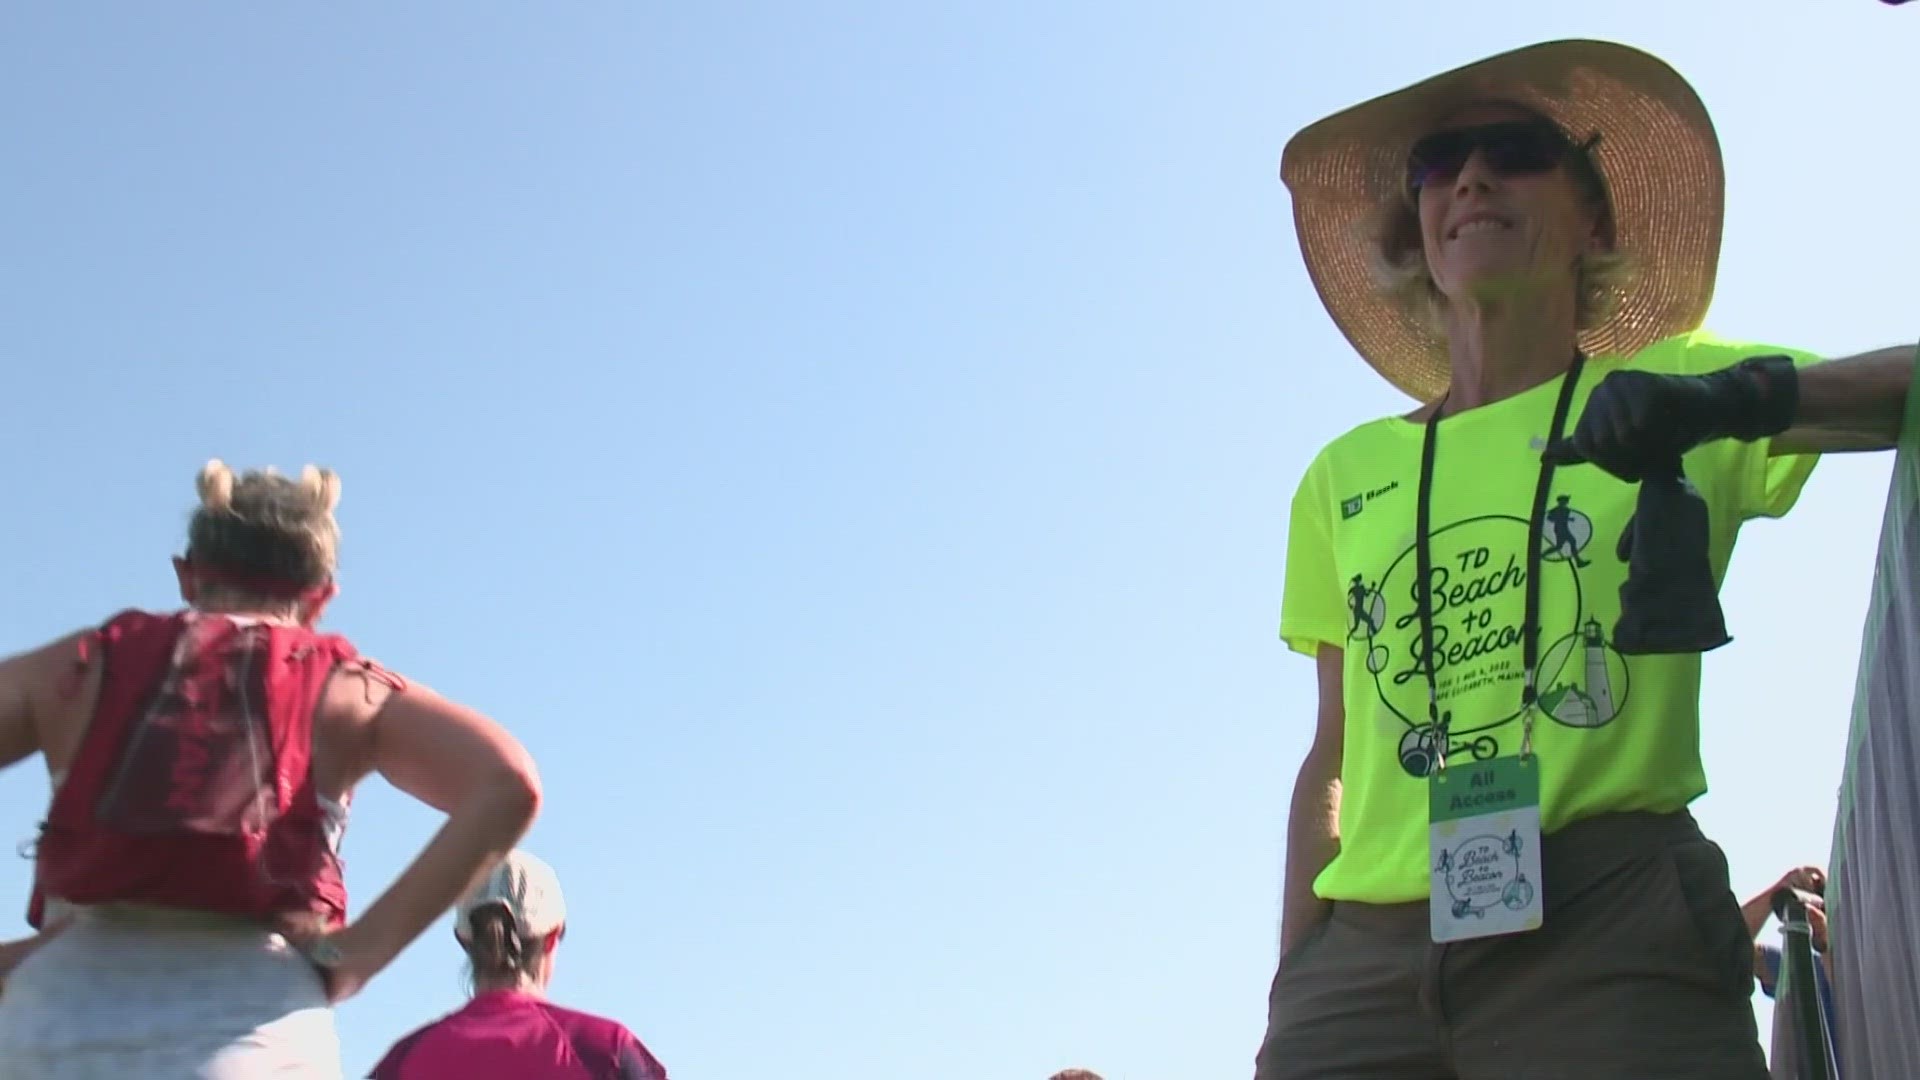 TD Beach to Beacon 10K founder Joan Benoit Samuelson offers tips ahead of  race